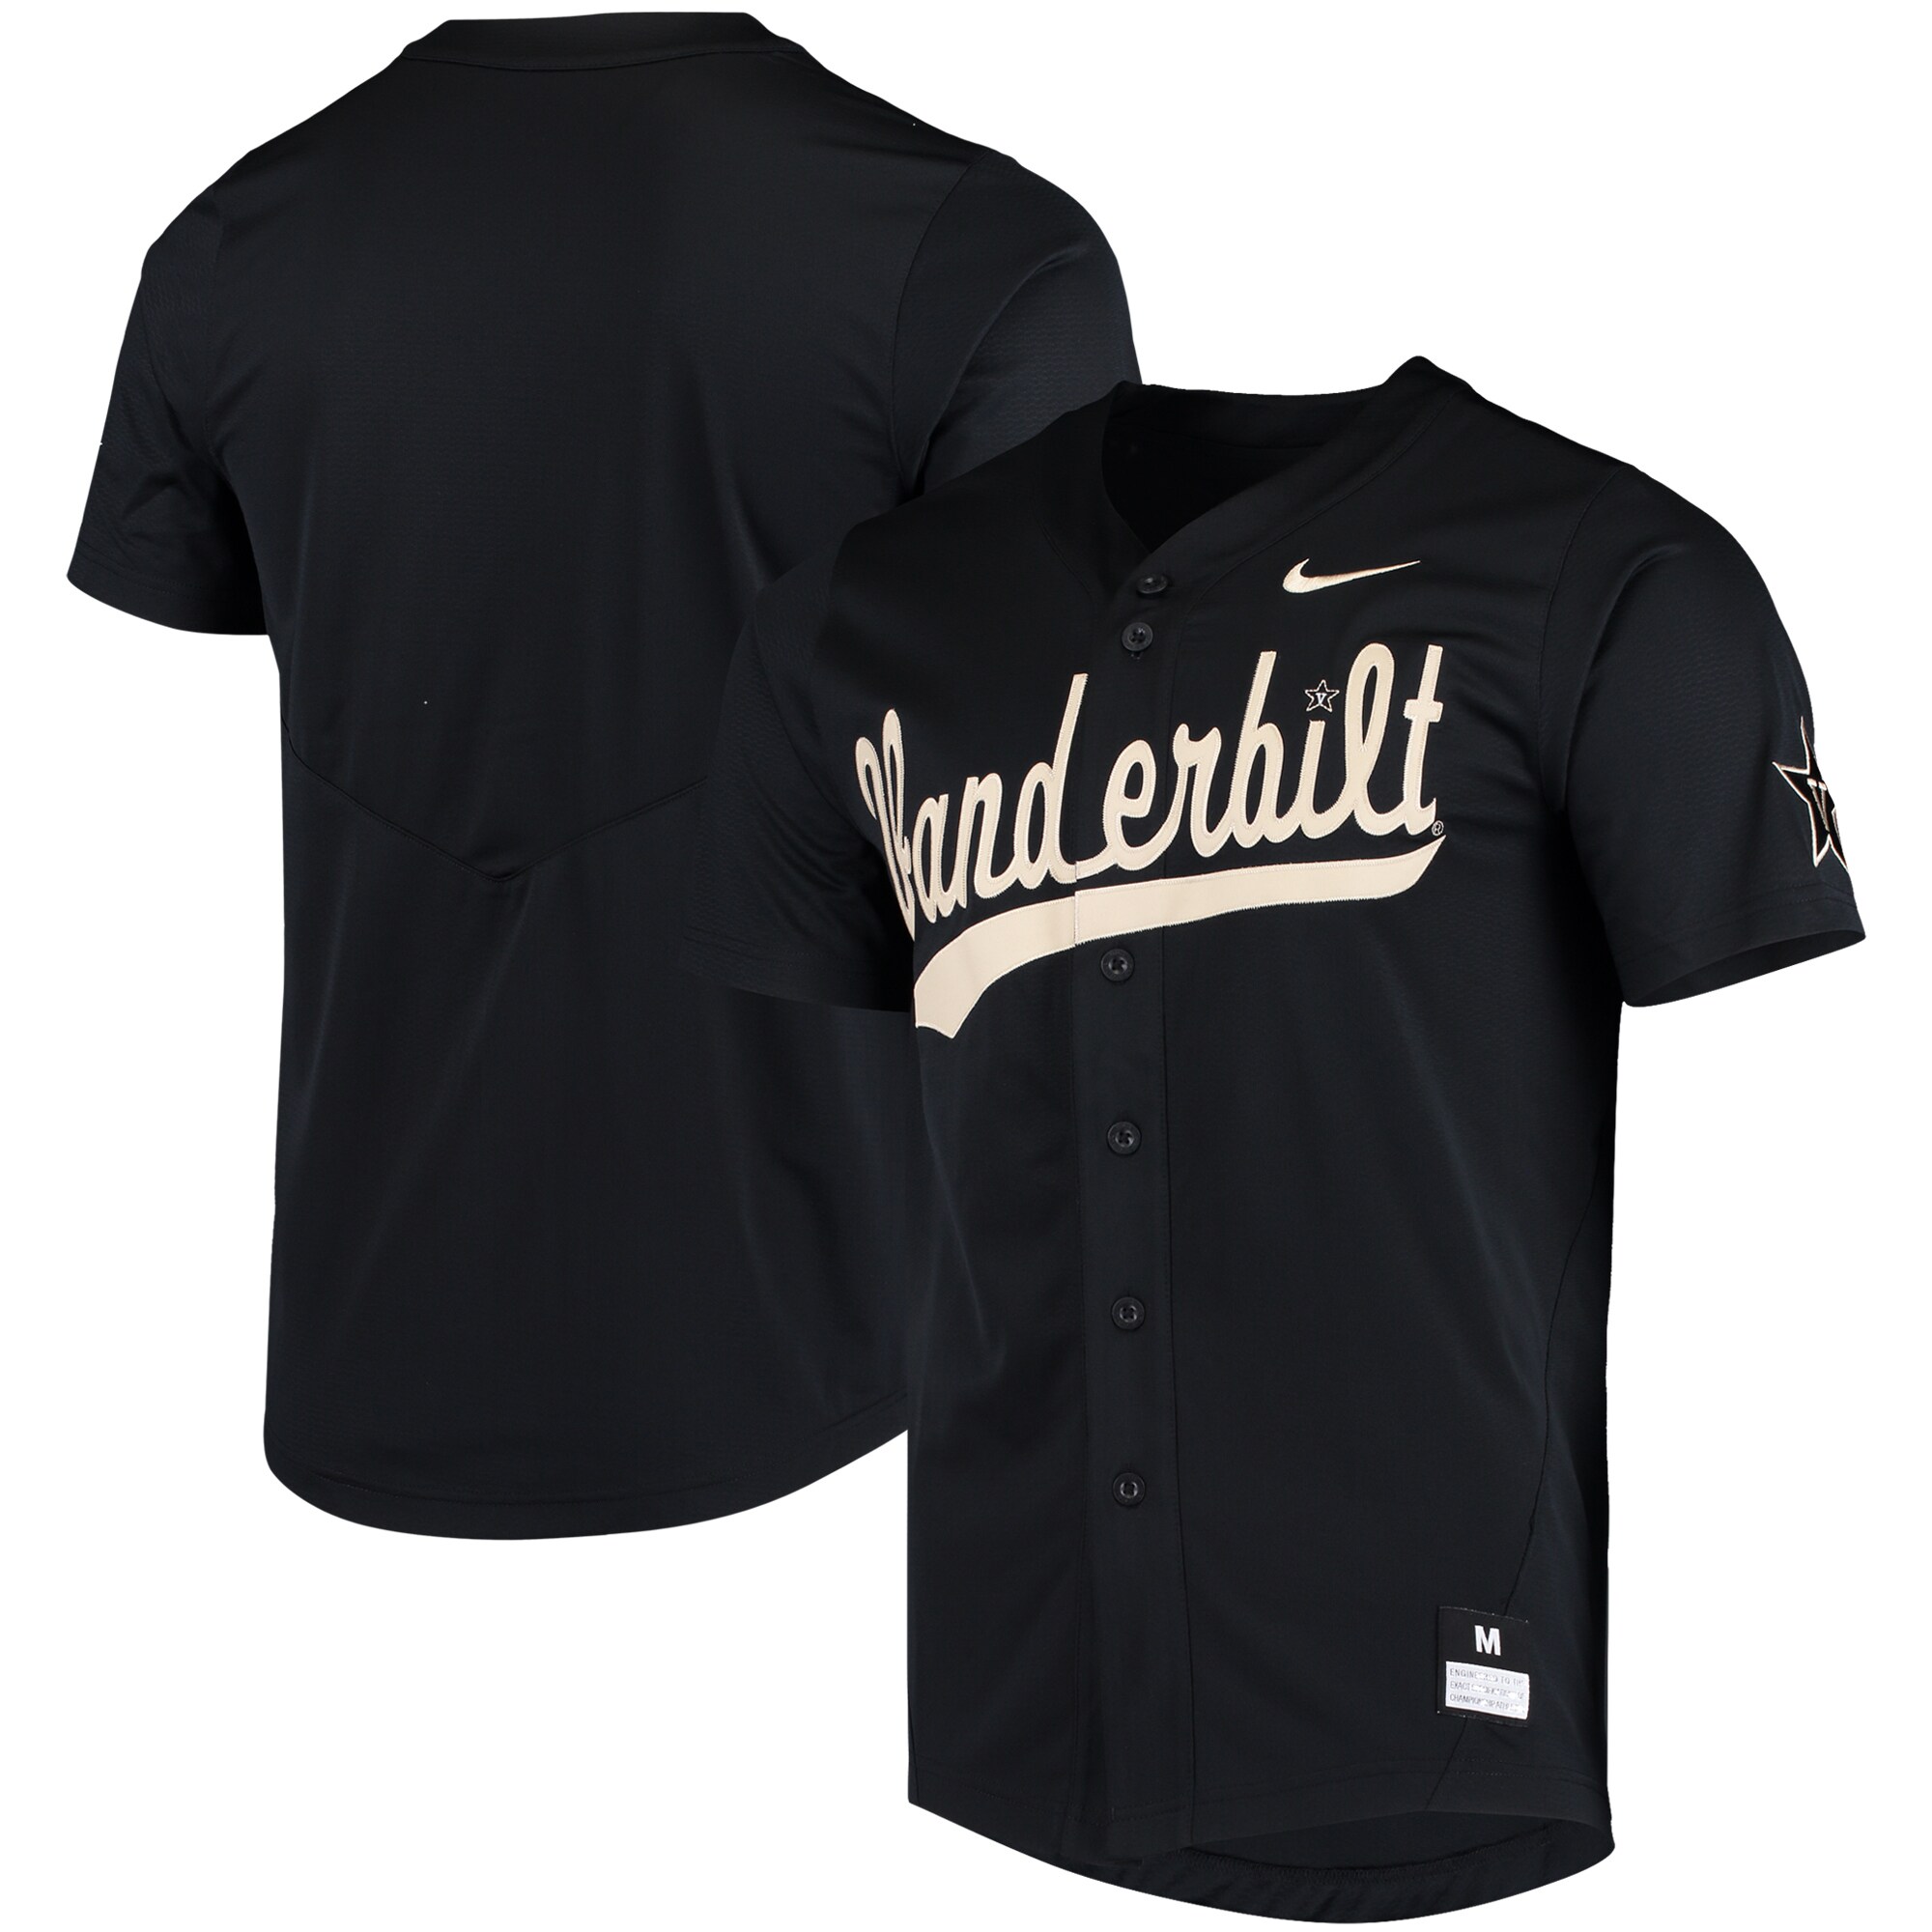 Vanderbilt Commodores Vapor Untouchable Elite Replica Full-Button Baseball Jersey - Black For Youth Women Men